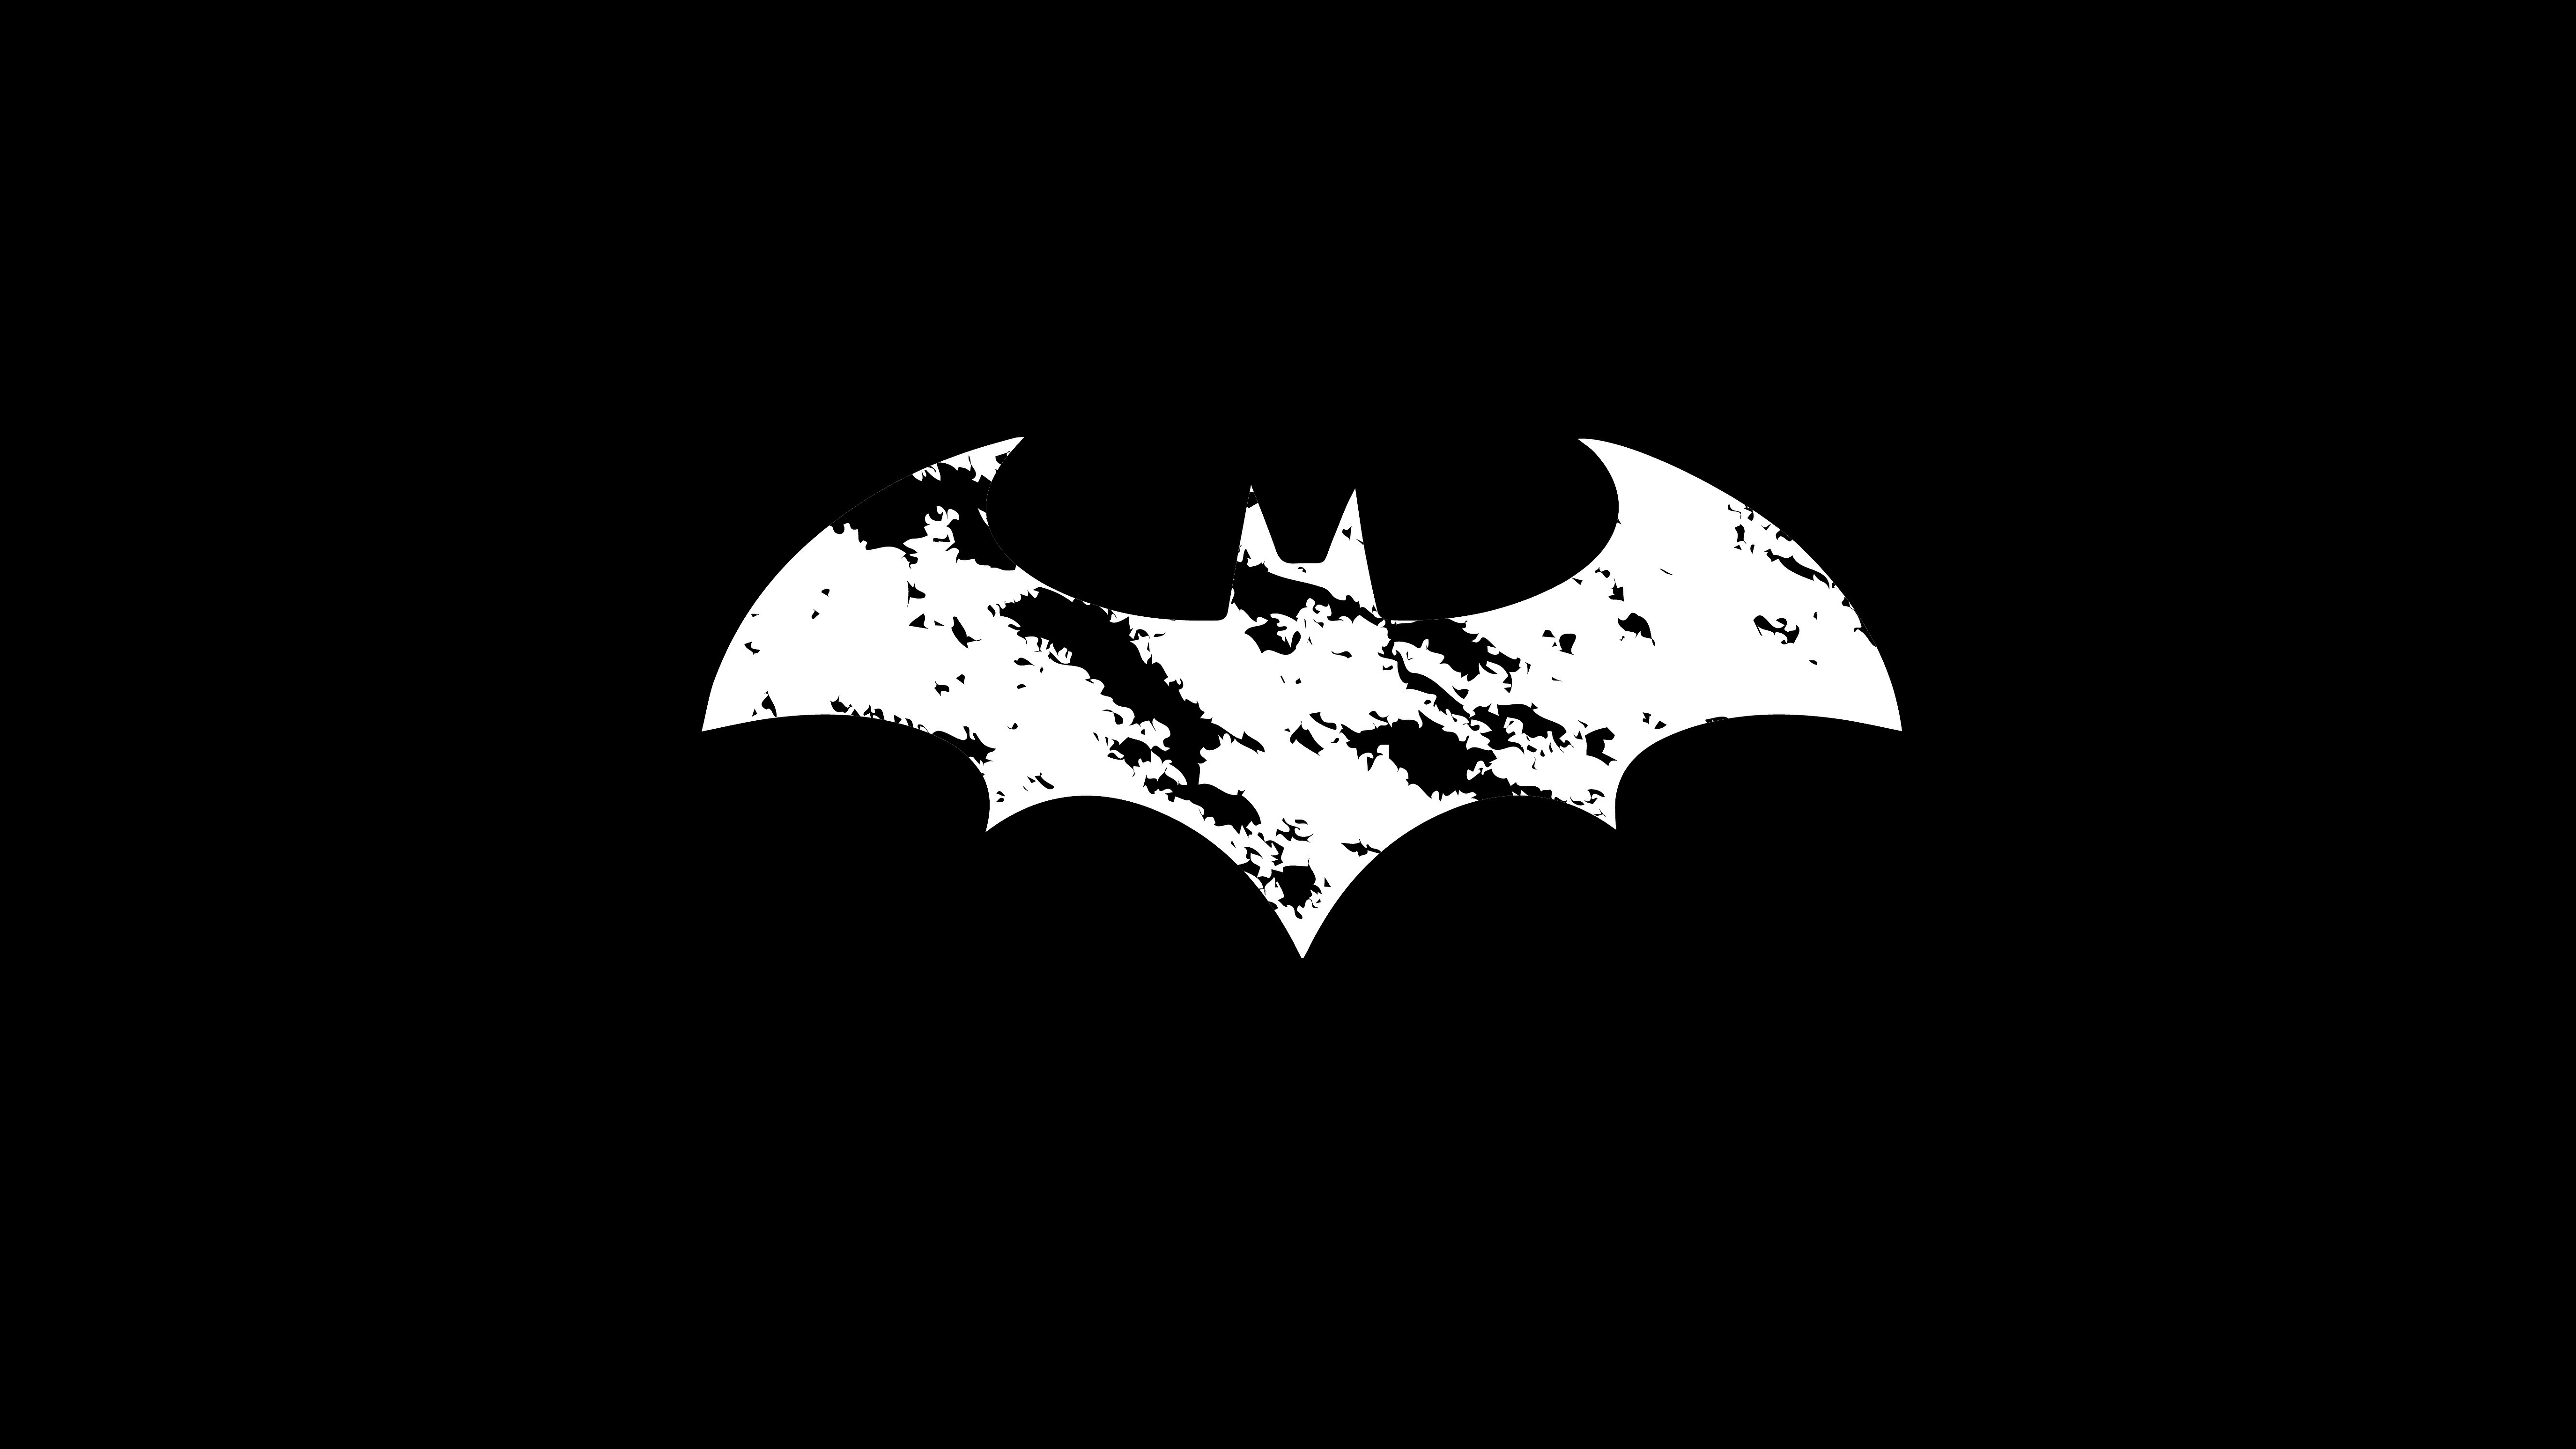 Best Bat Symbol Wallpapers